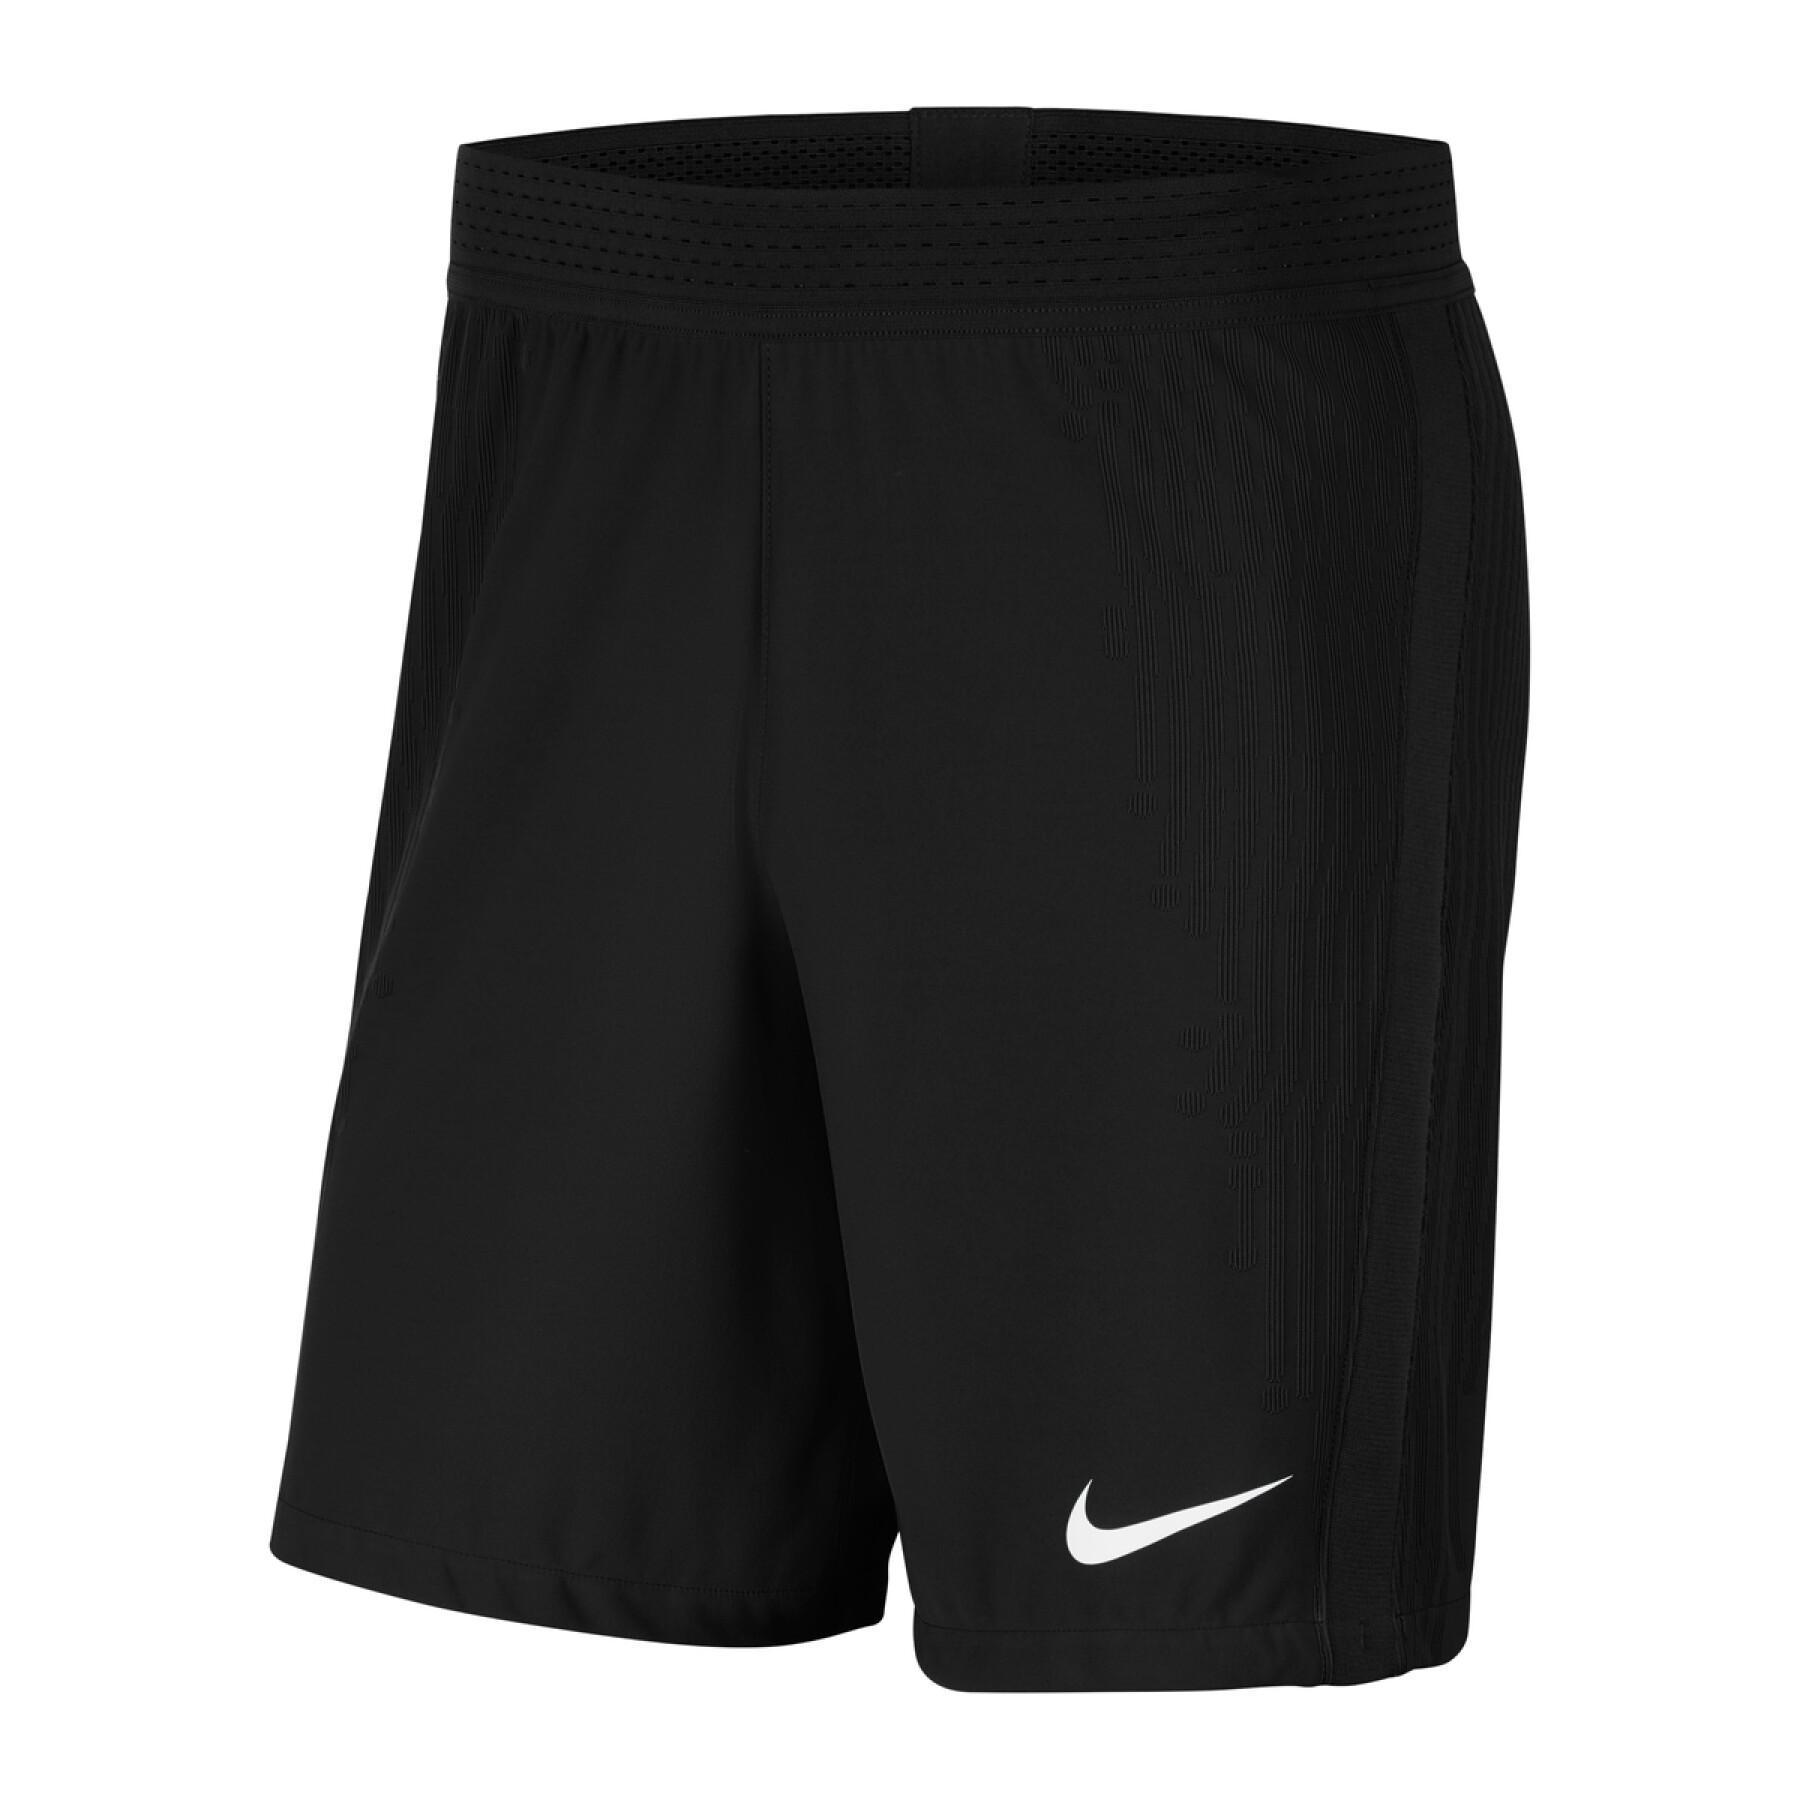 Short Nike Vapor Knit III - Nike - Training Shorts - Teamwear